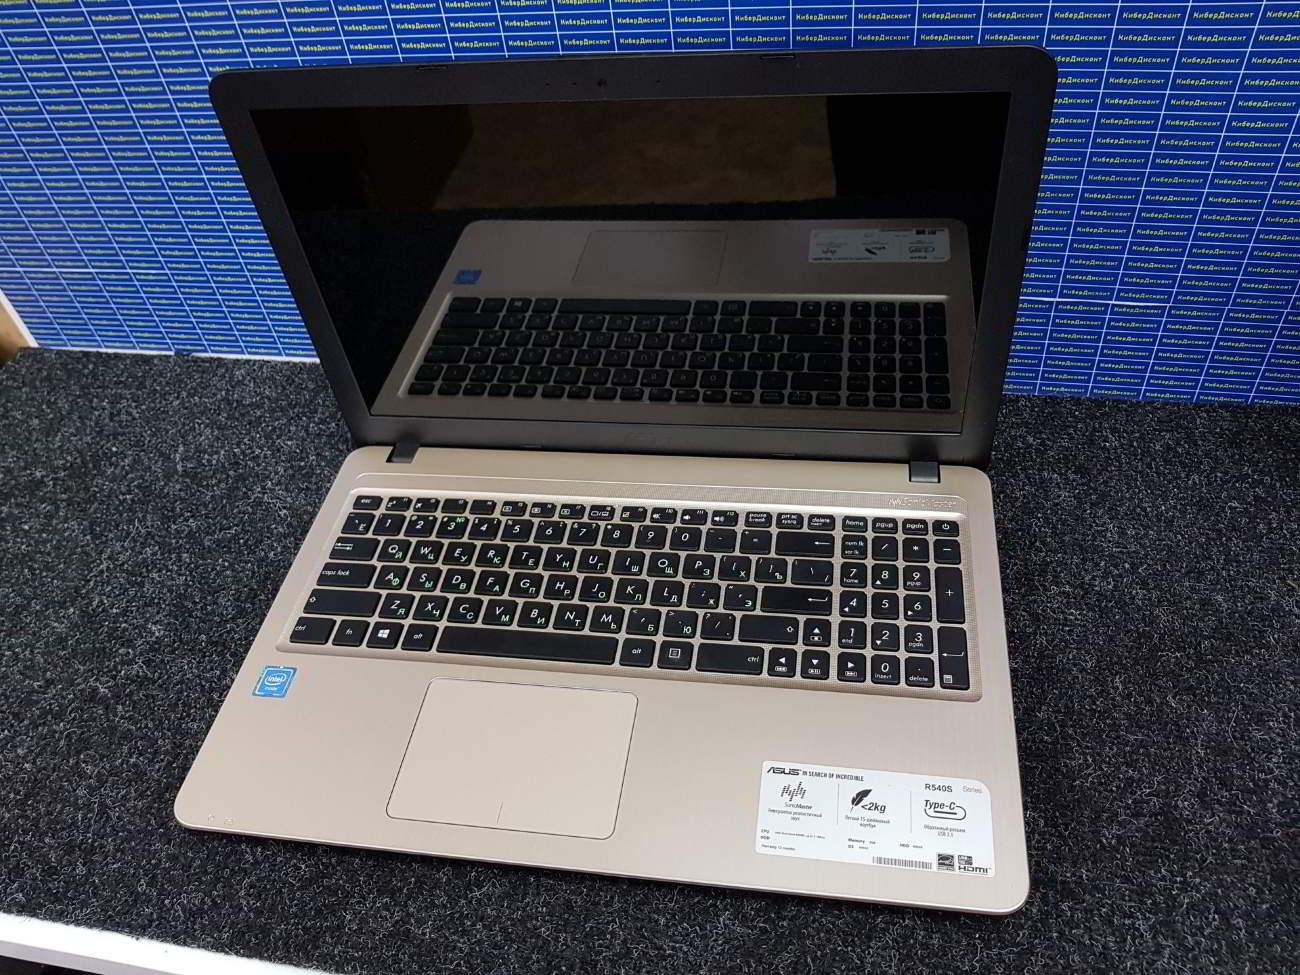 Цена Ноутбука Асус R540s